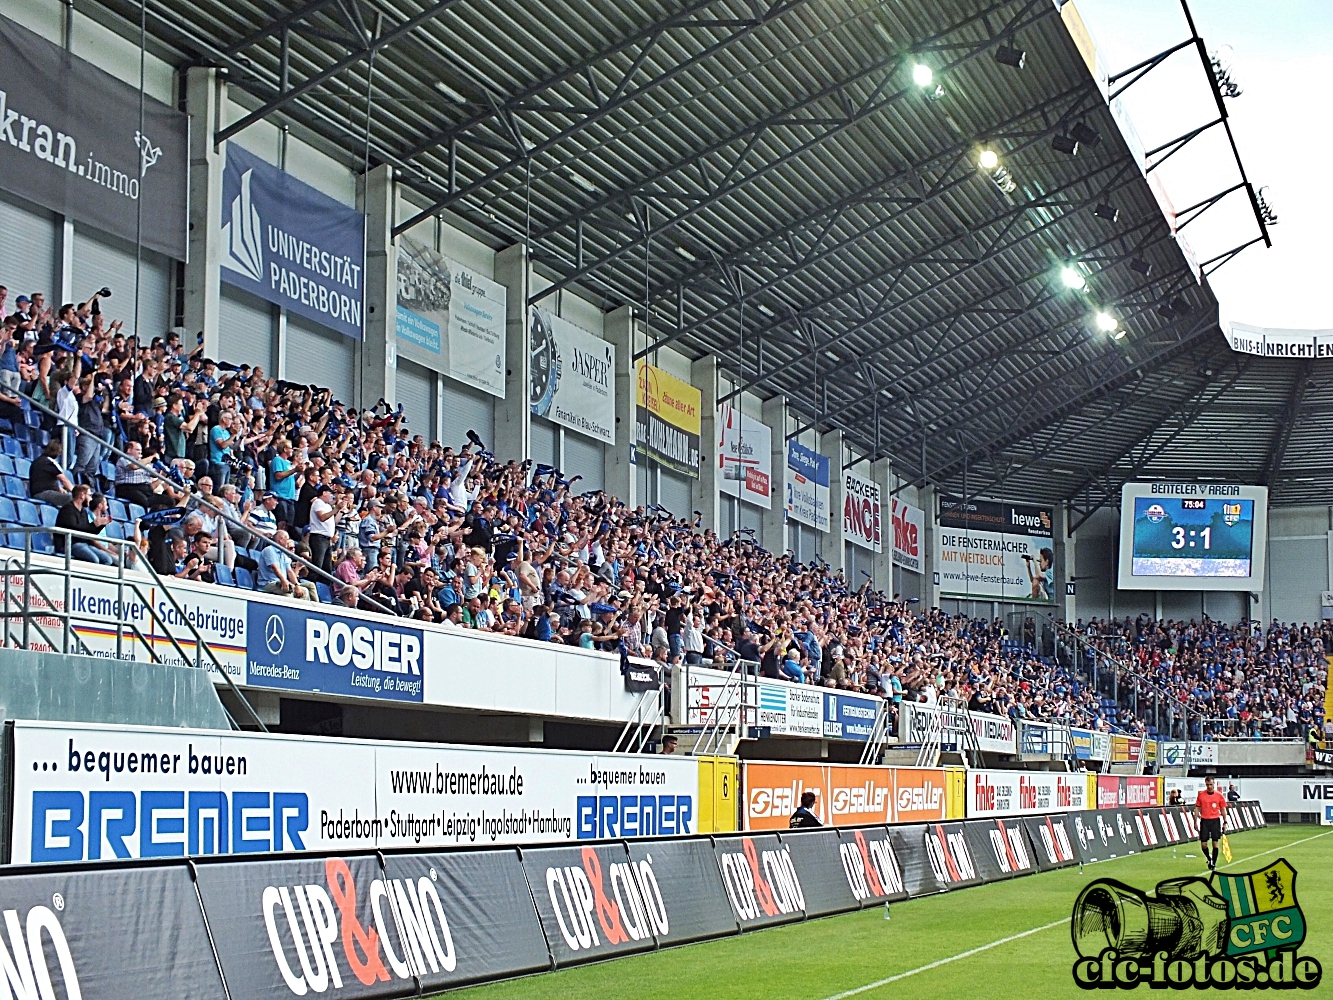 SC Paderborn 07 - Chemnitzer FC 3:2 (2:0)